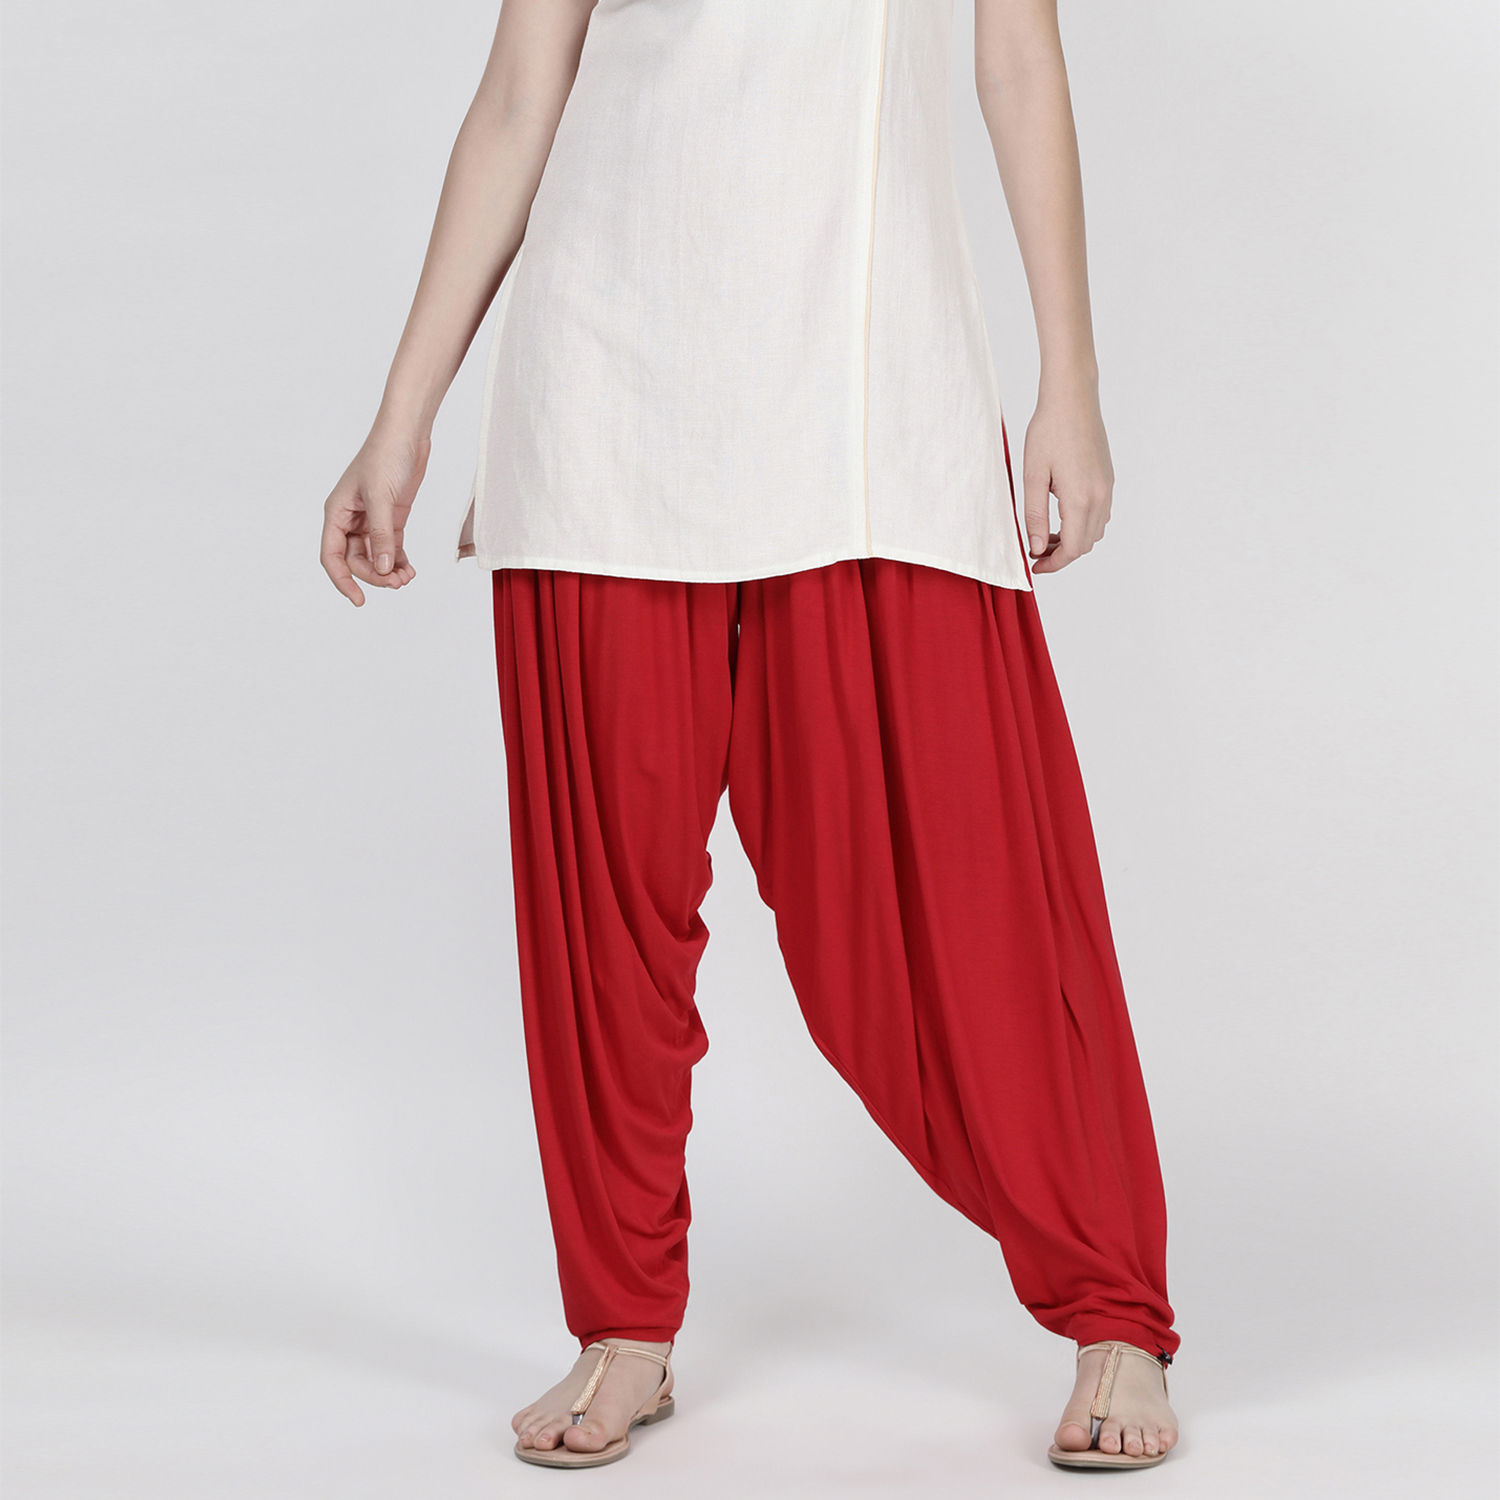 Get Stylish and Comfortable Women's Patiala Pants | Prisma Garments